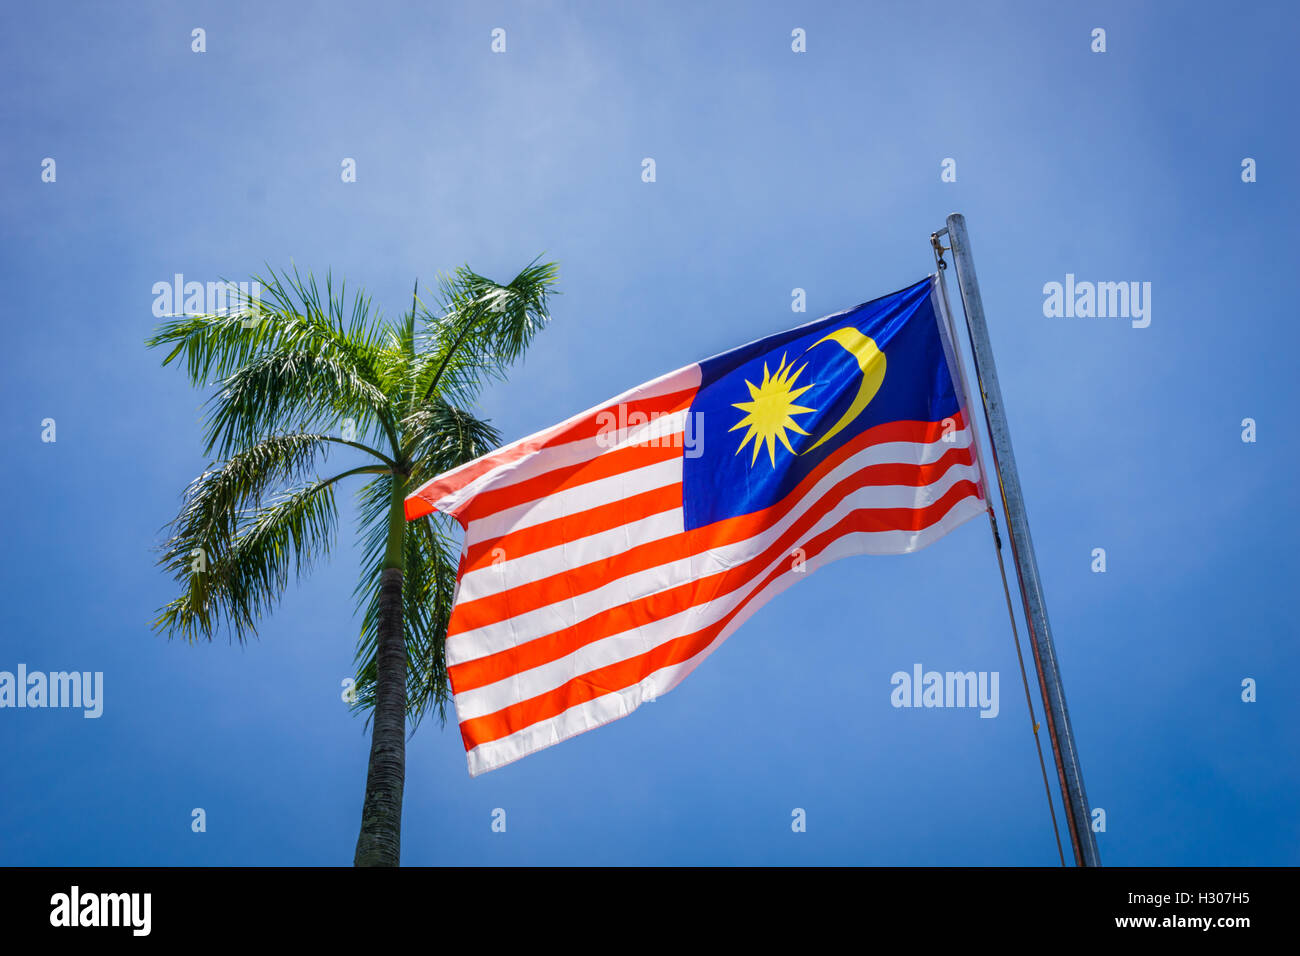 Malaysian flag waving besides a palm tree Stock Photo